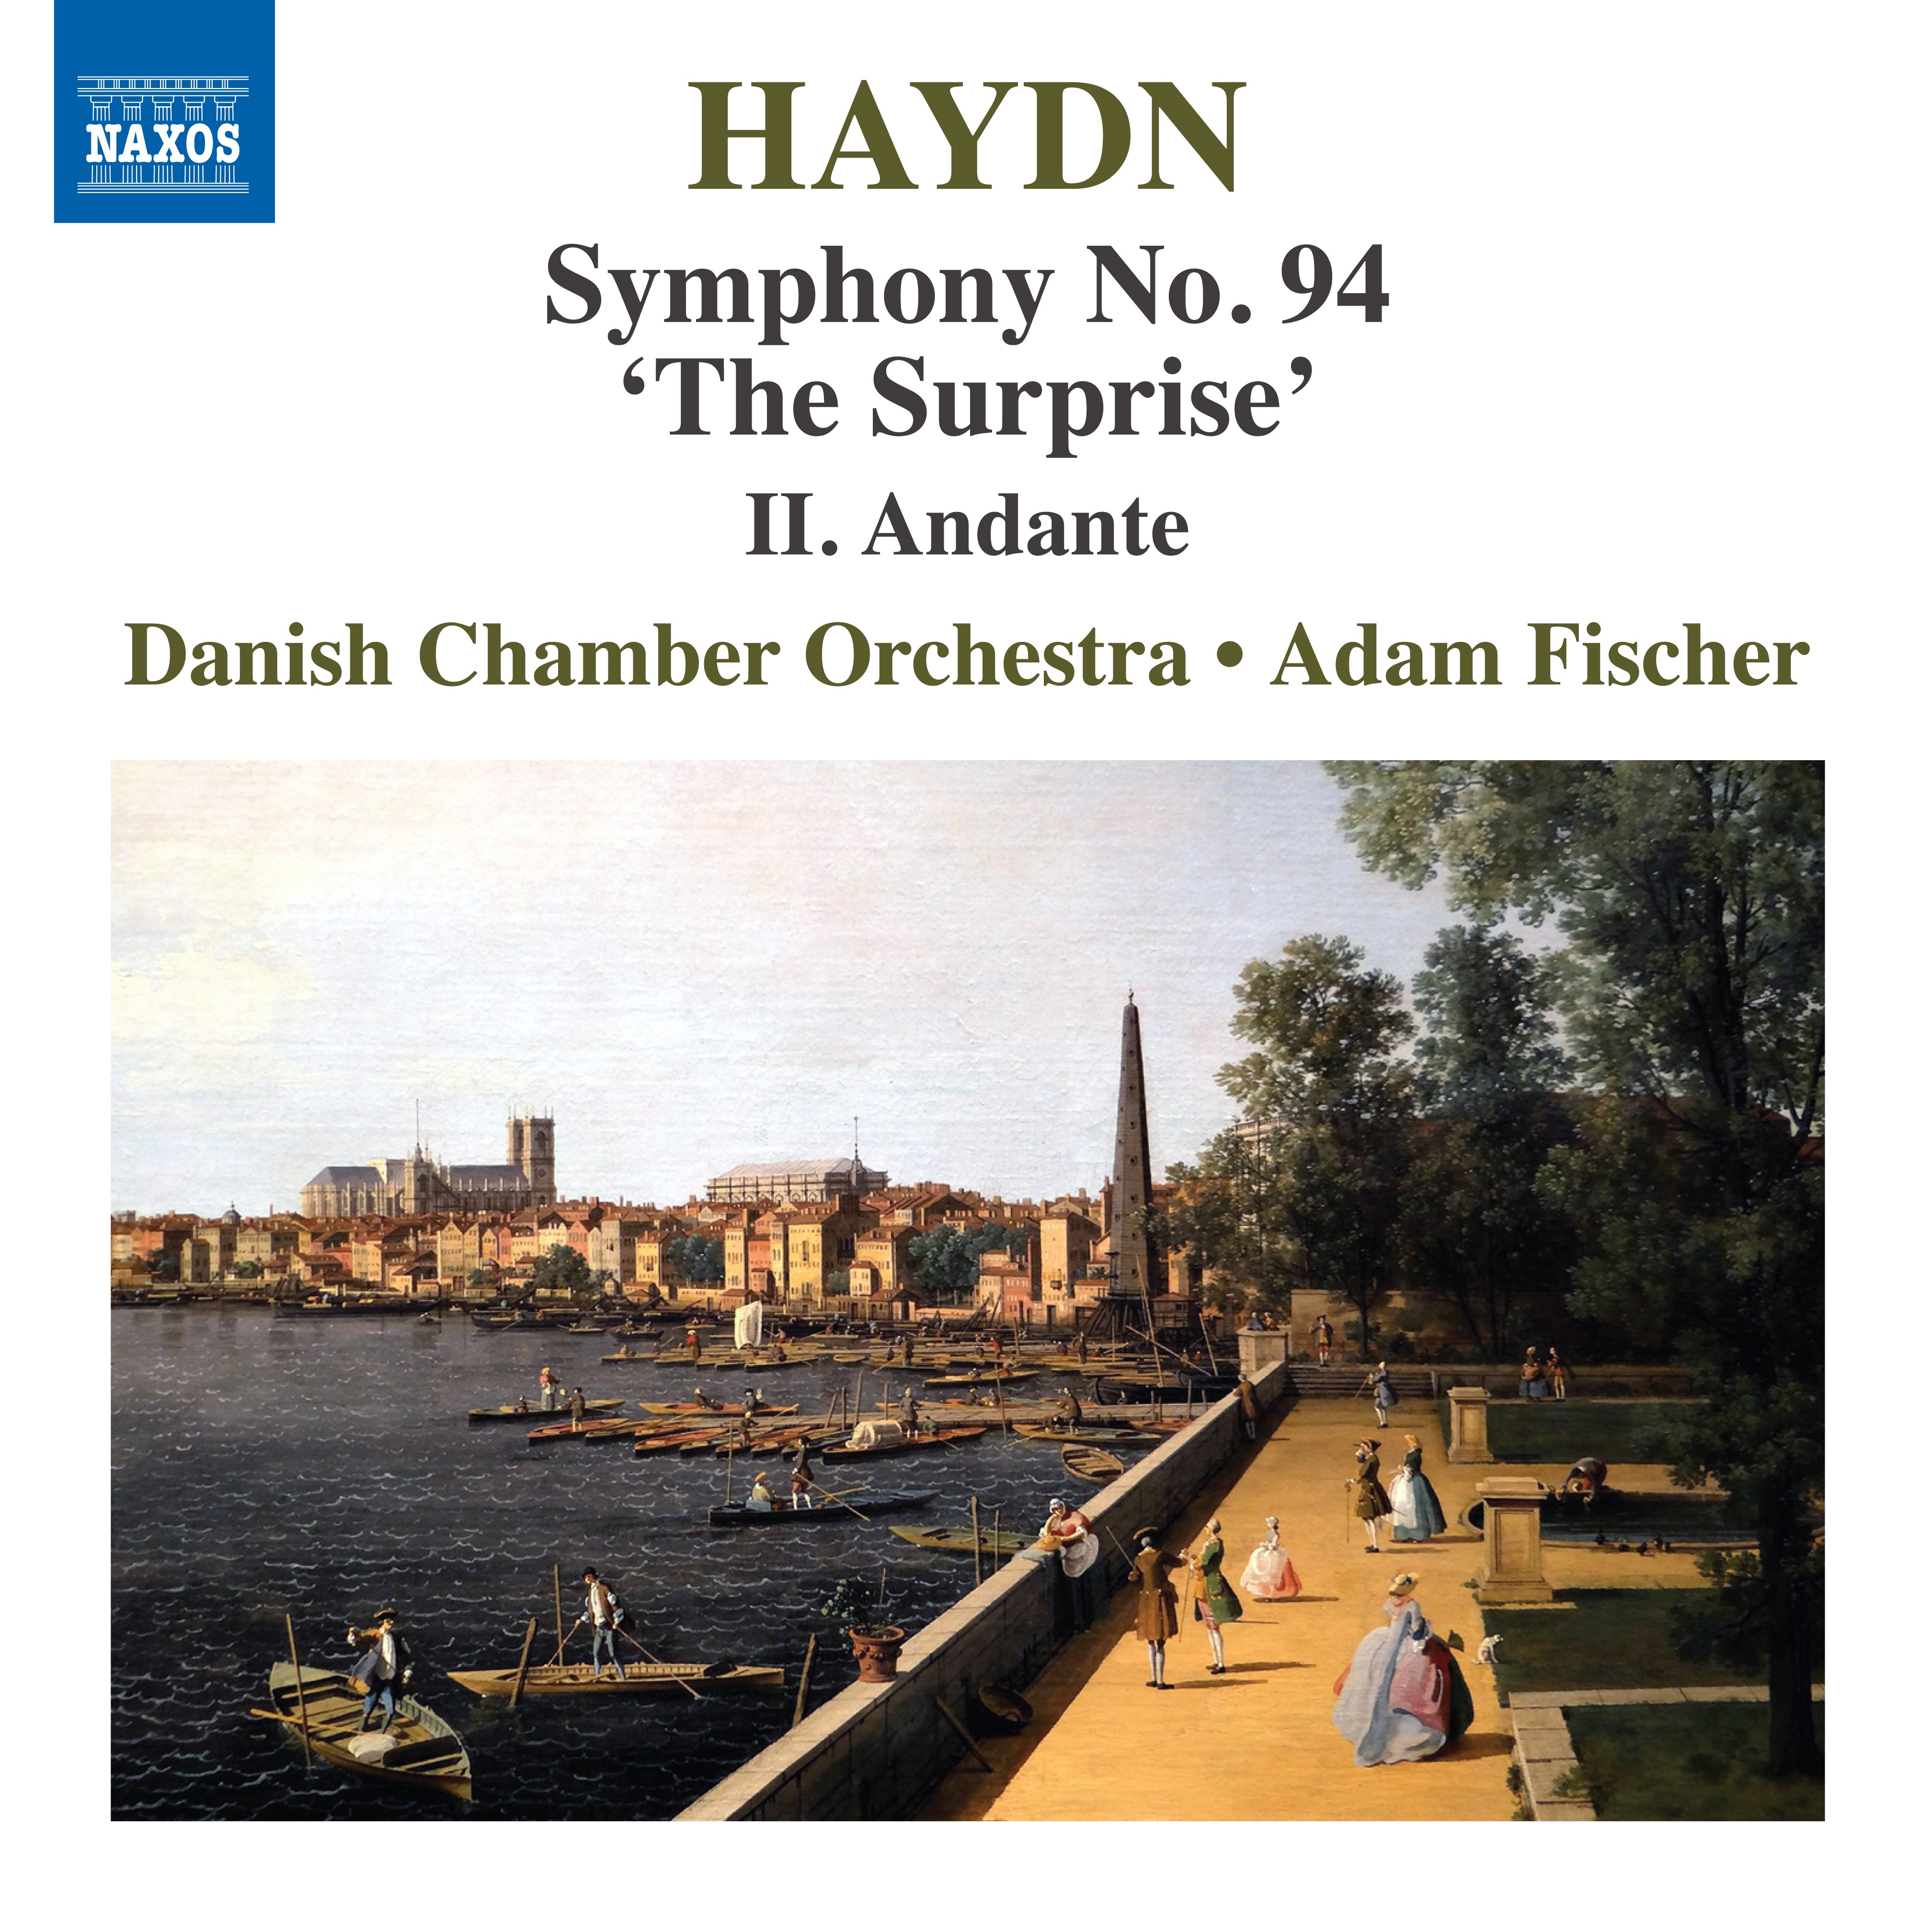 HAYDN, J.: Symphony No. 94, "The Surprise": II. Andante